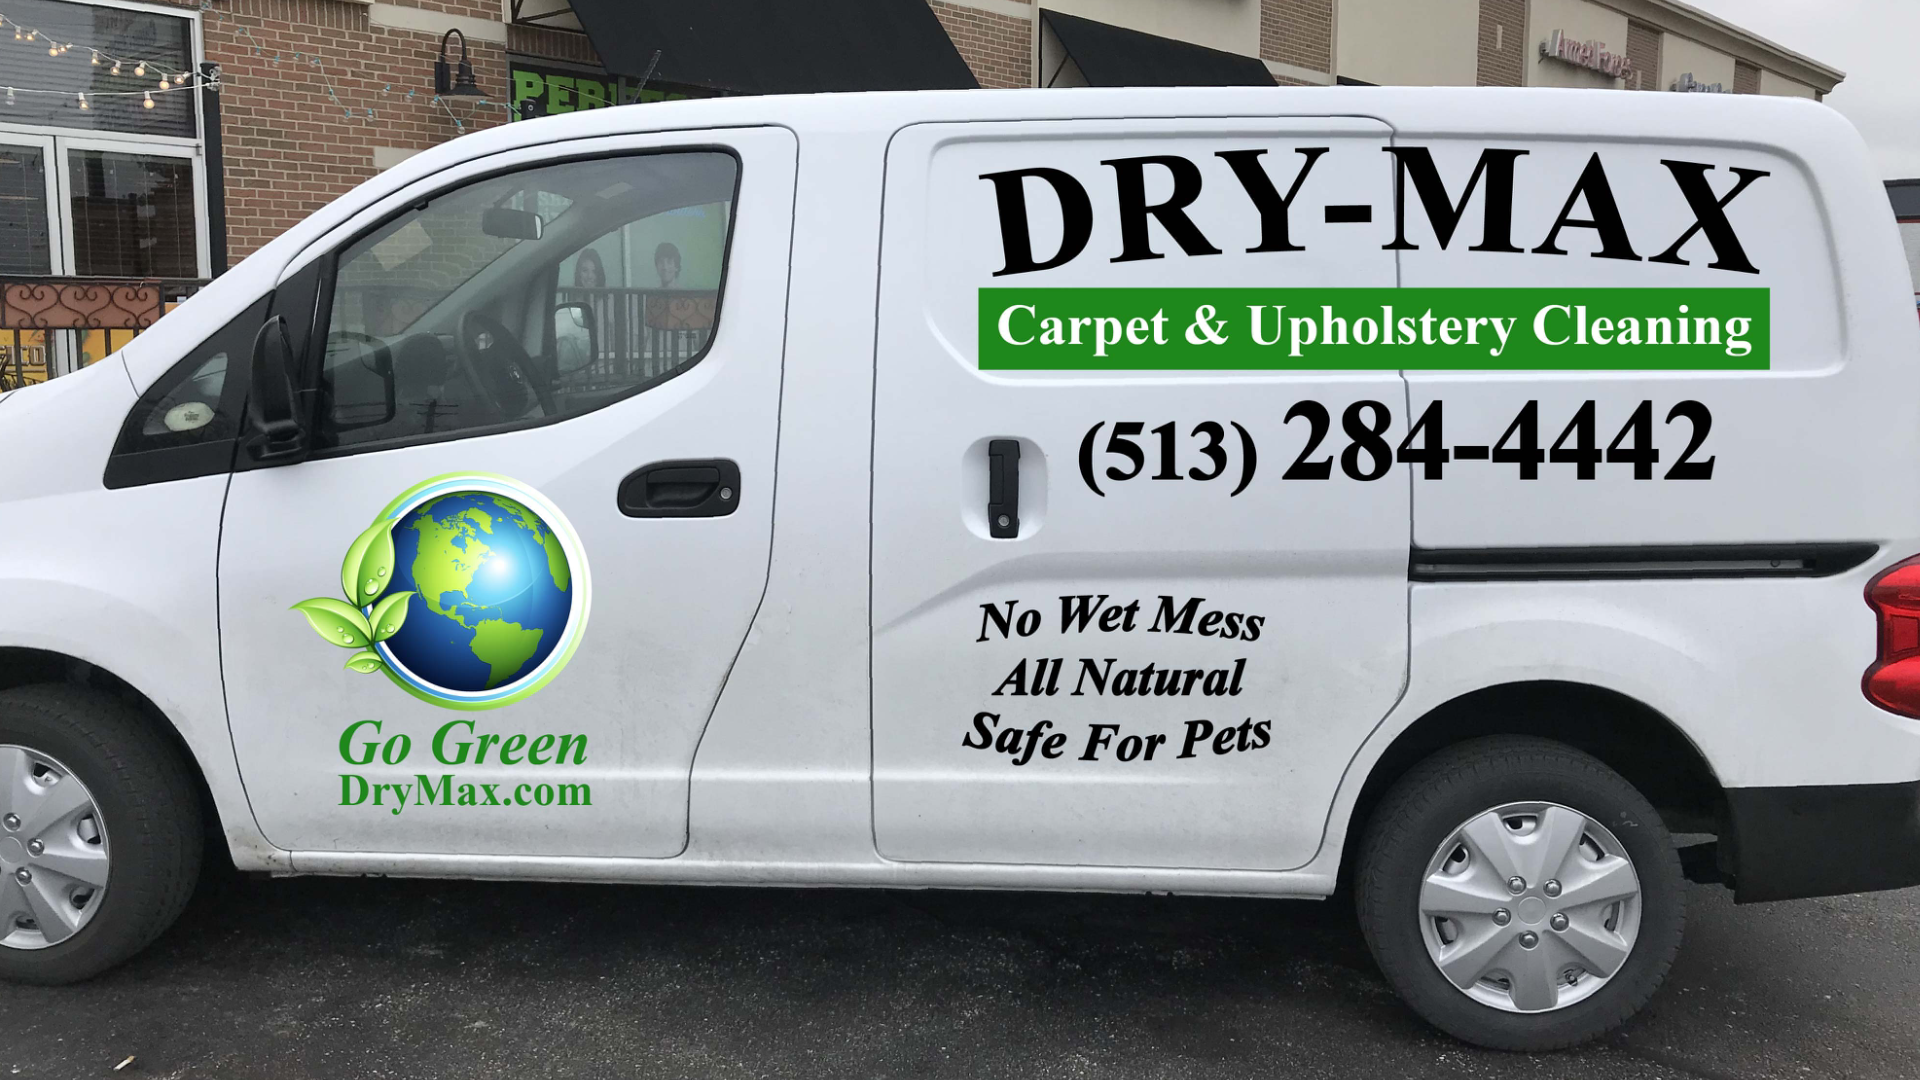 Dry-Max Carpet & Upholstery